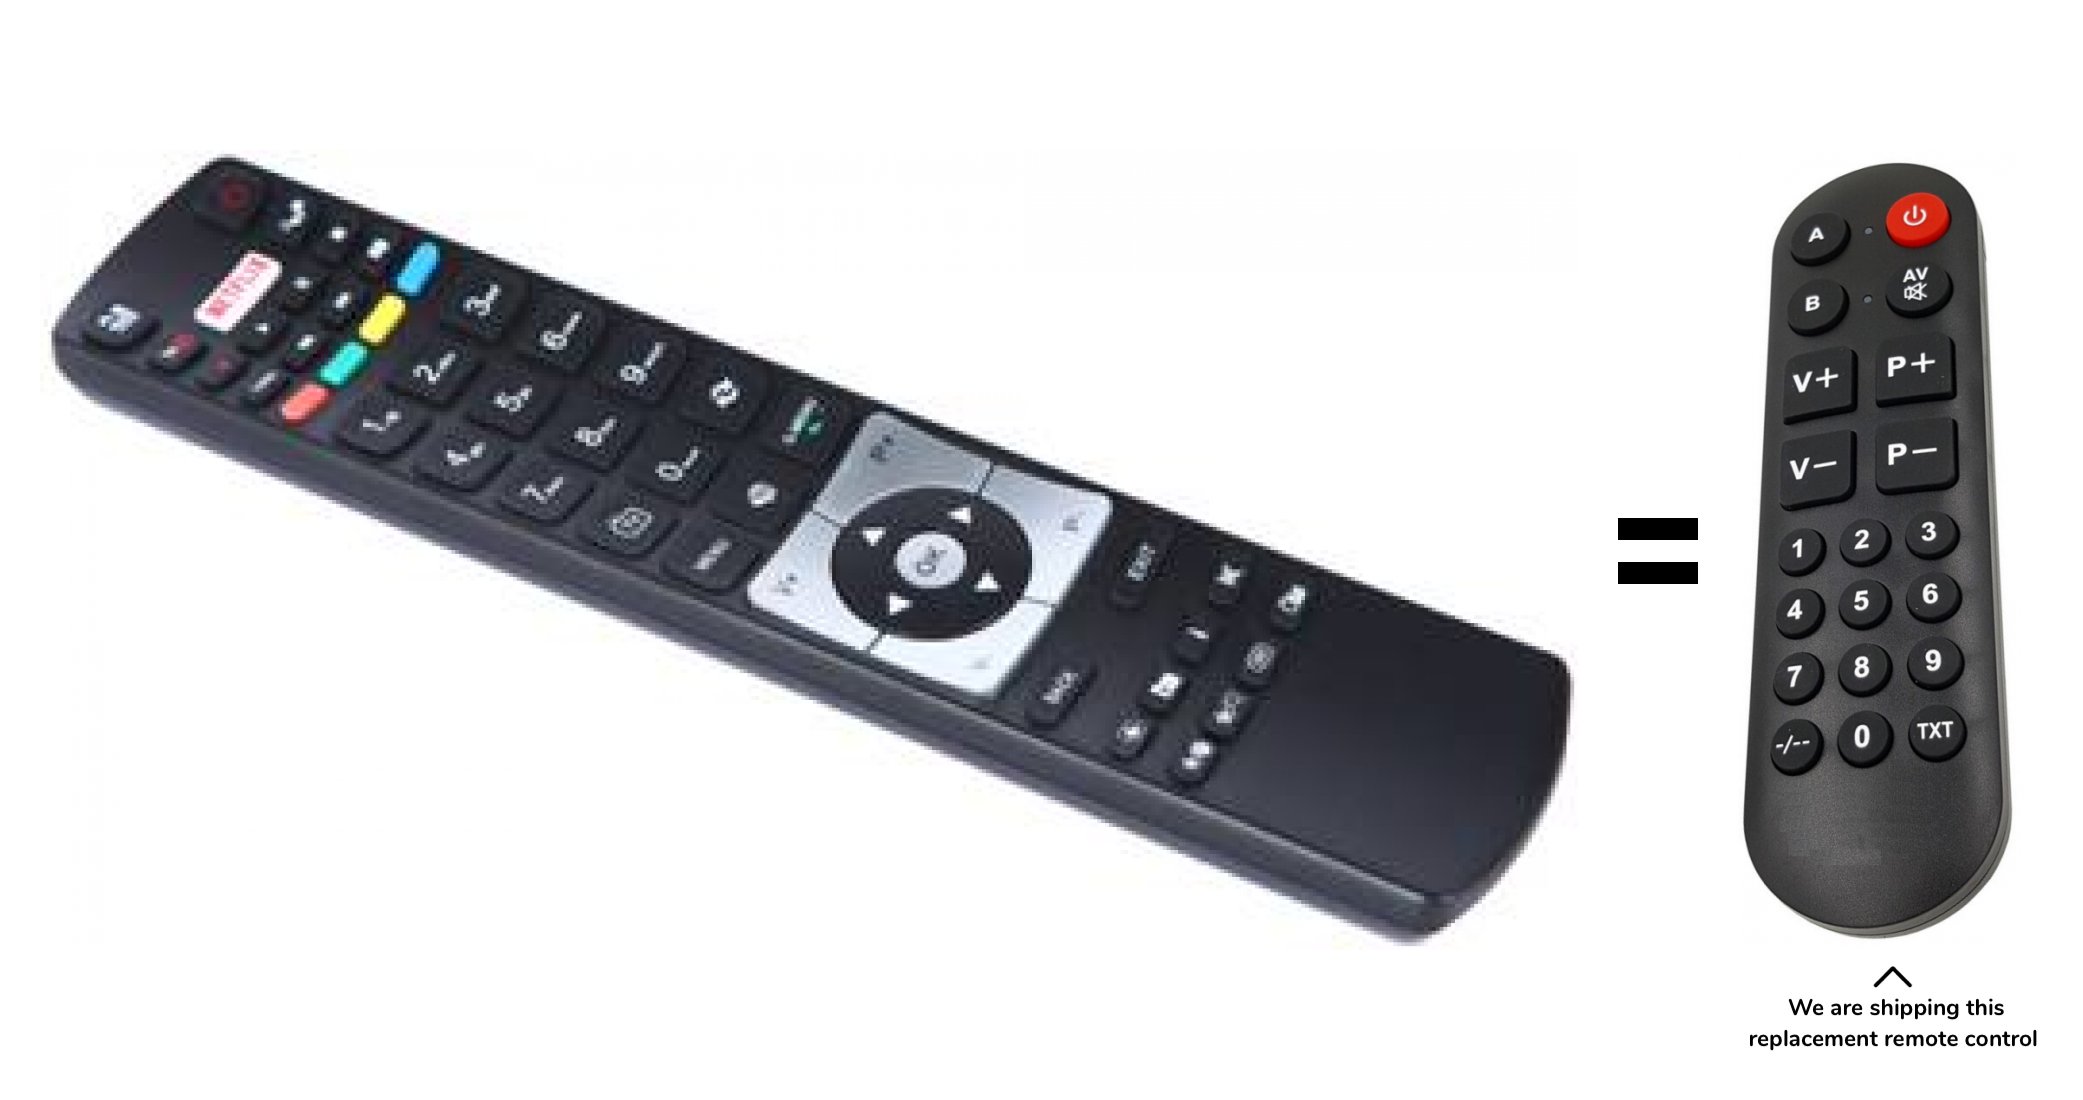 Finlux TVF50FUB8060, TVF50FFC5160 remote control for seniors